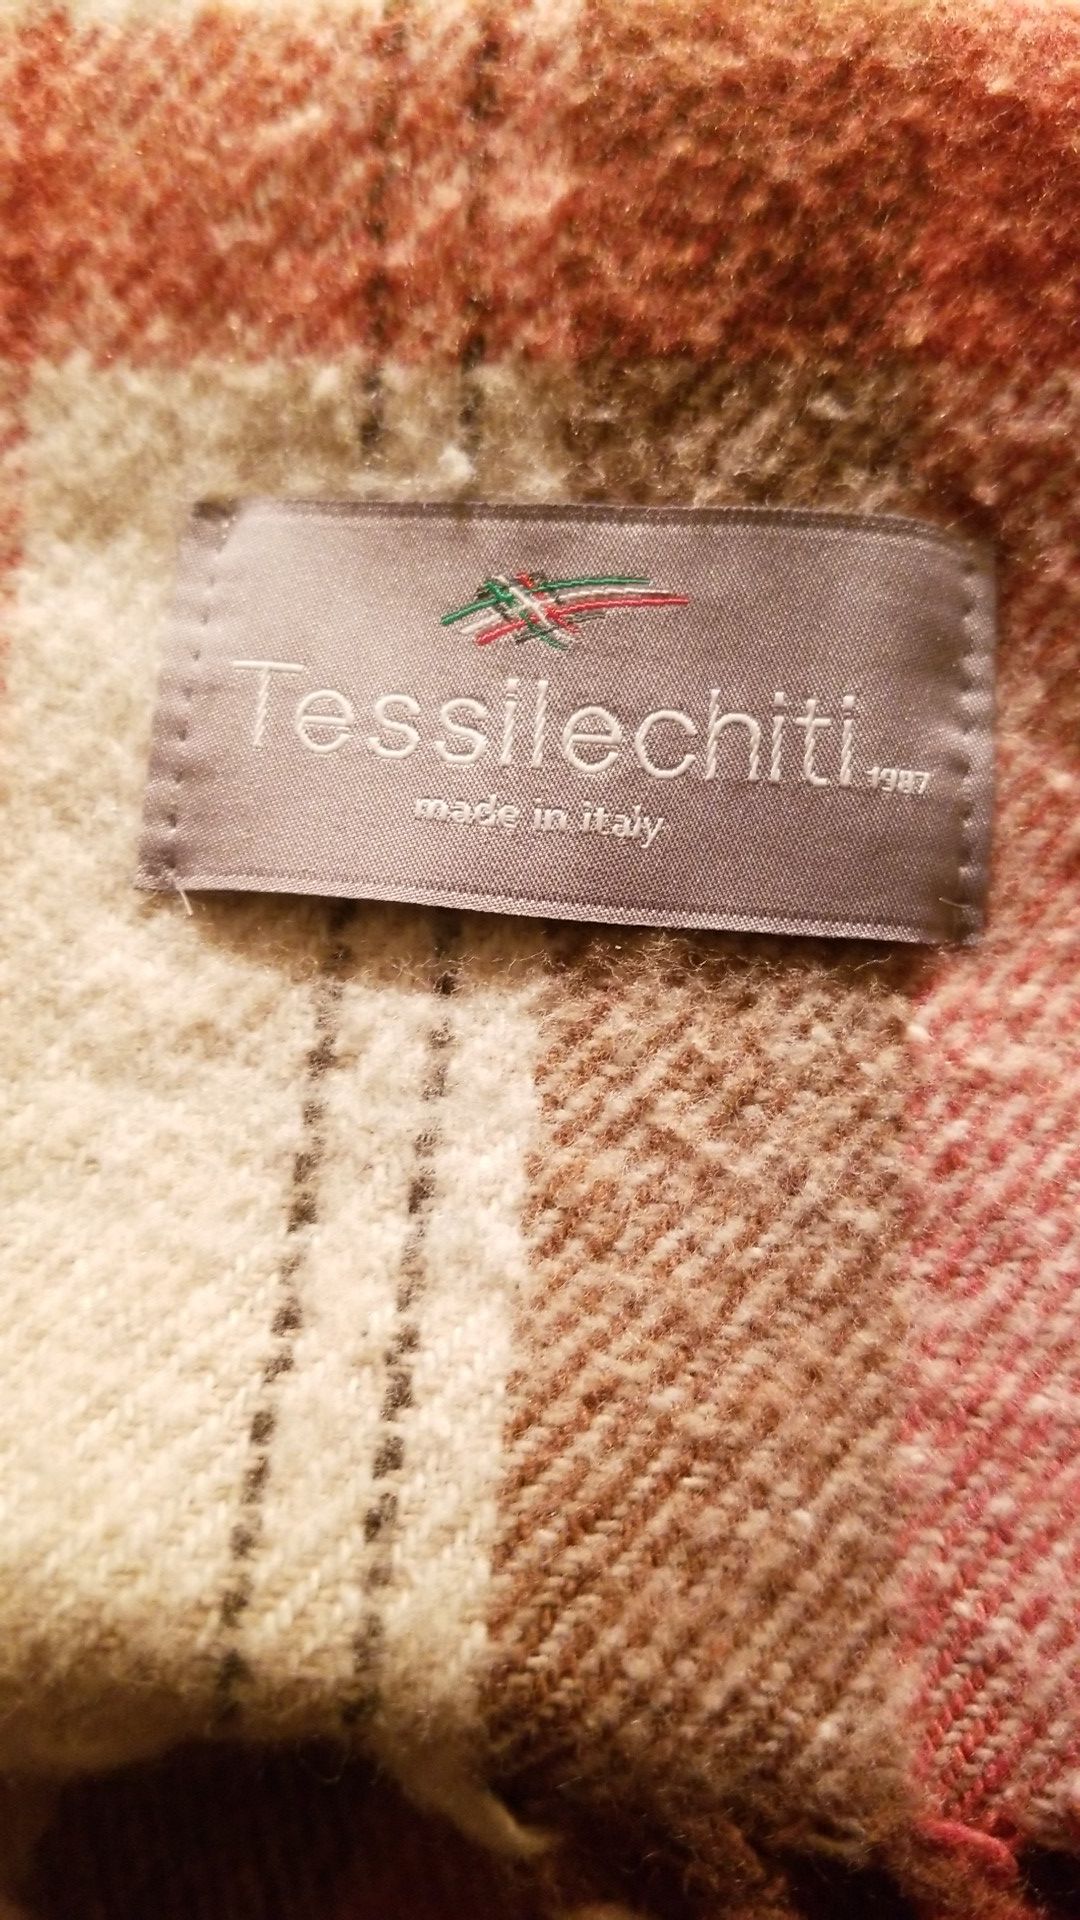 Tessilechiti throw blanket Plaid